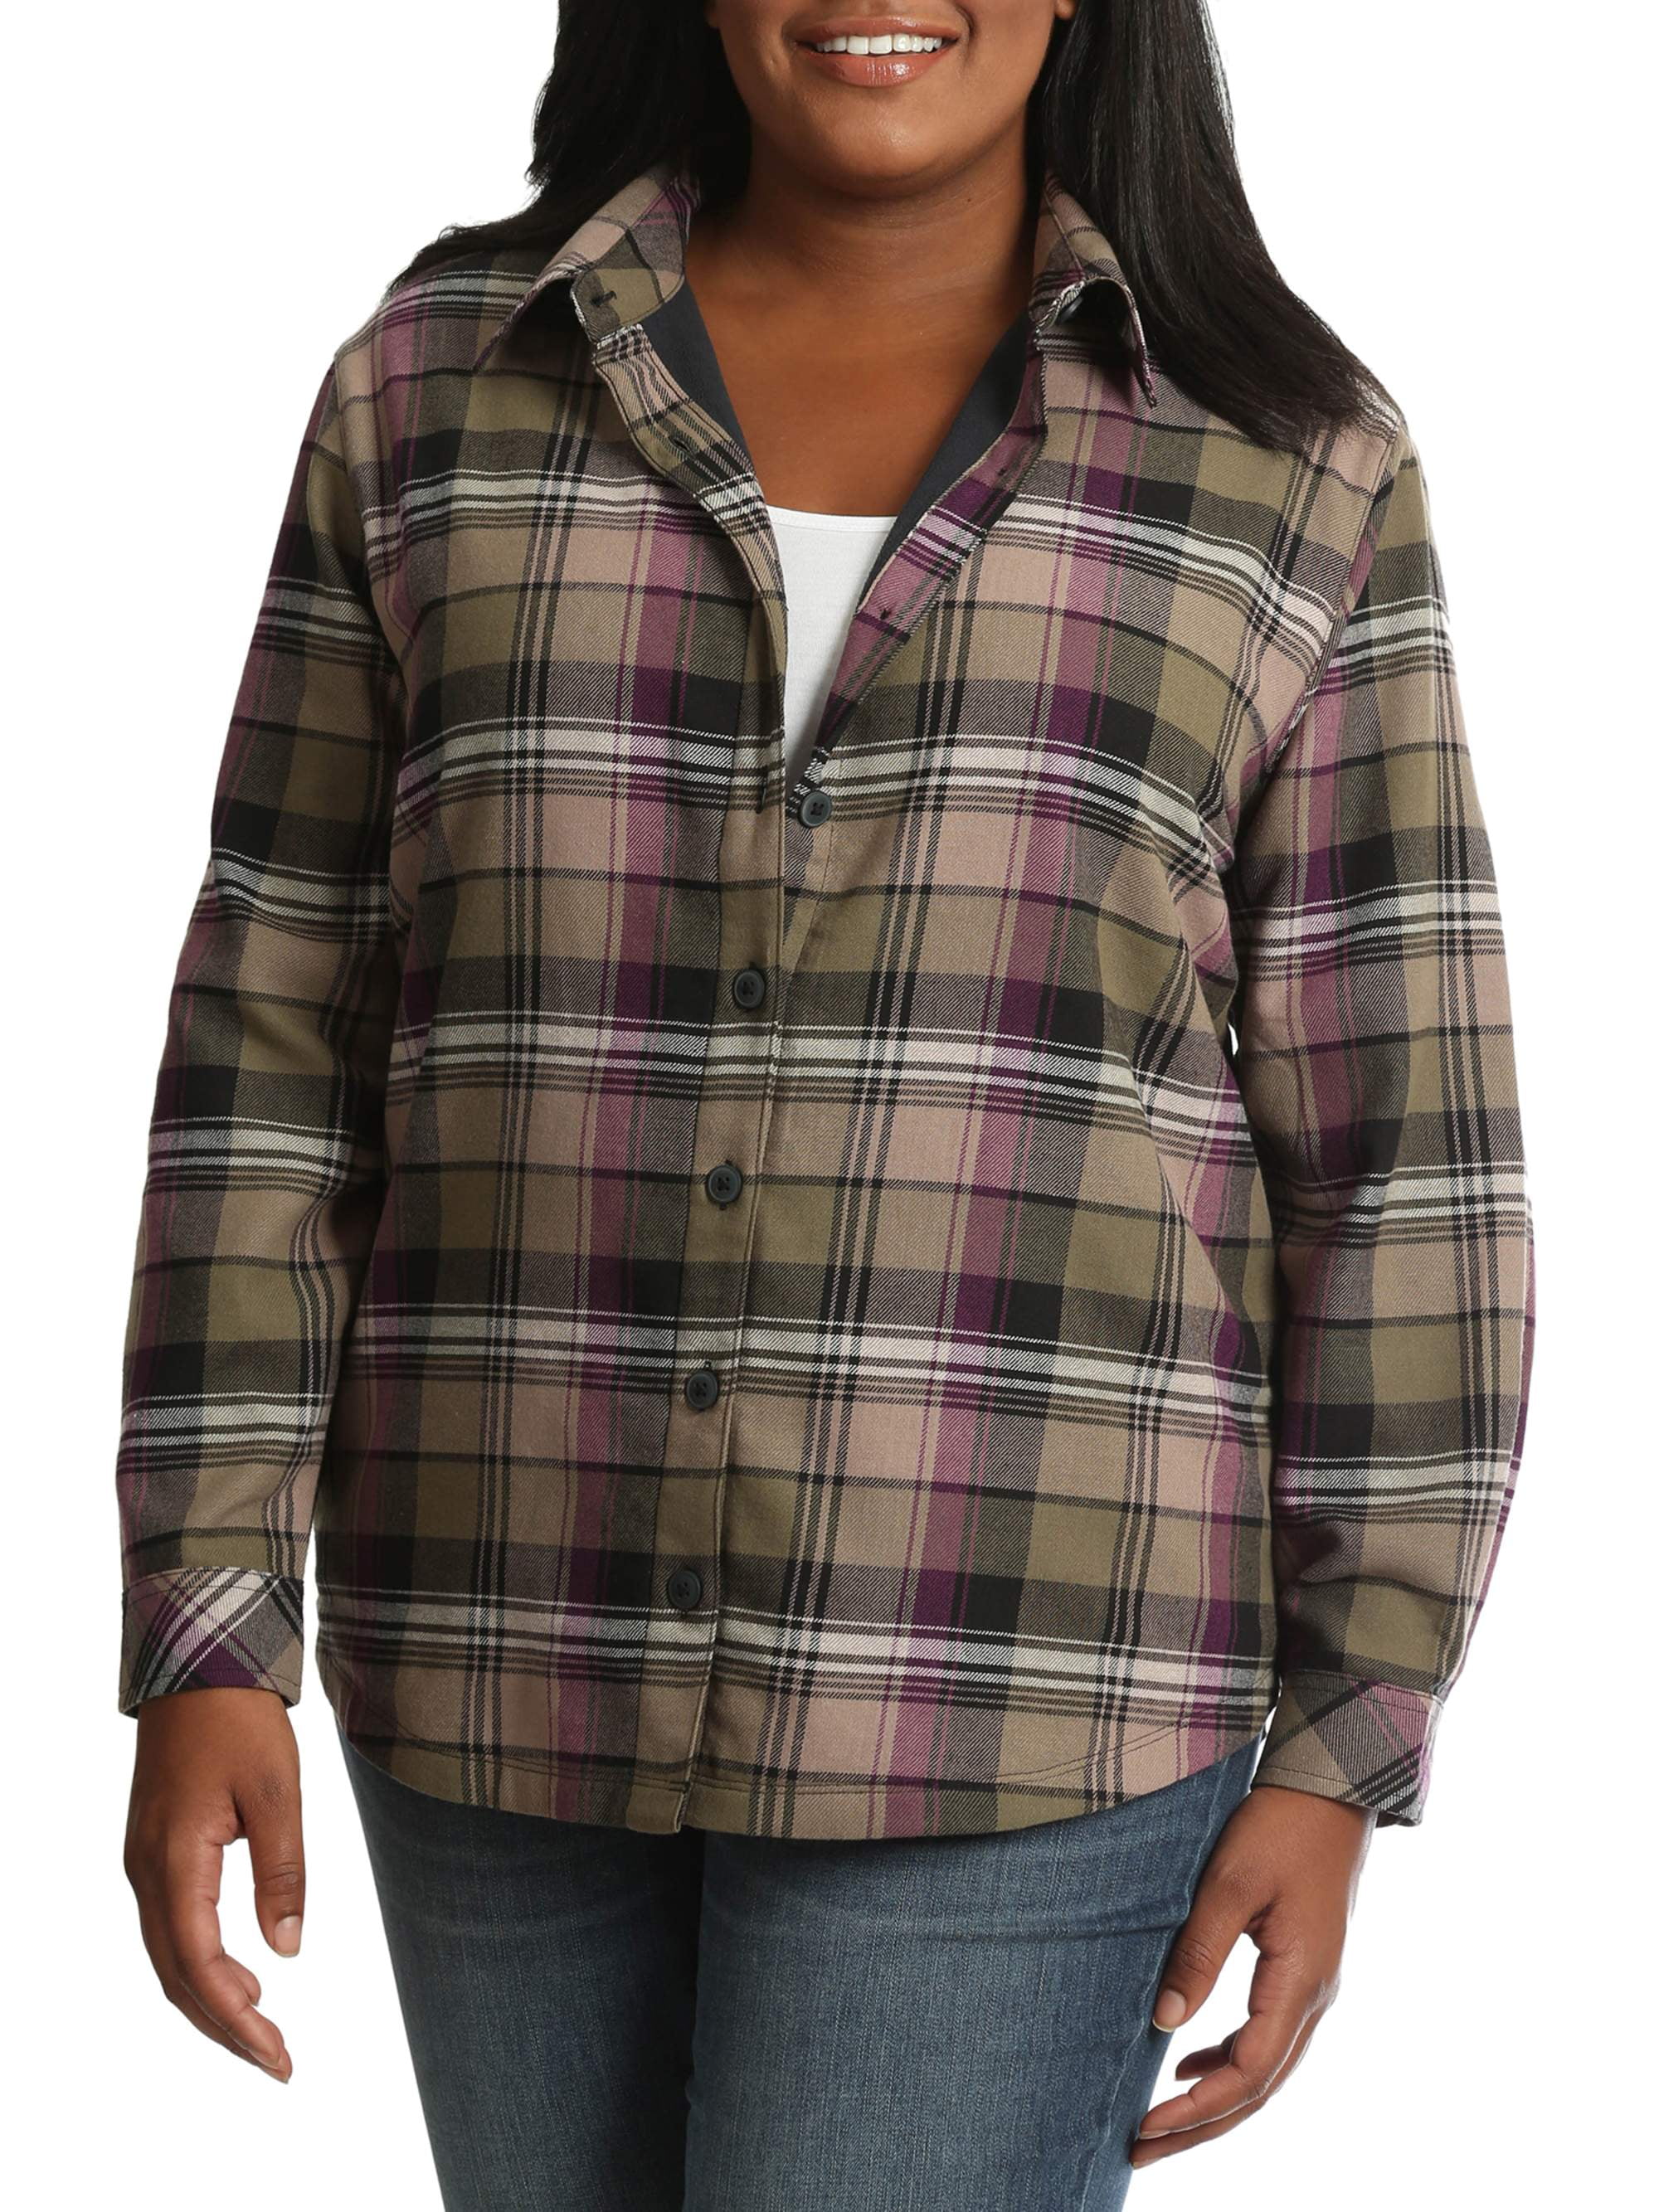 Lee Riders Women's Plus Fleece Lined Flannel Shirt - Walmart.com